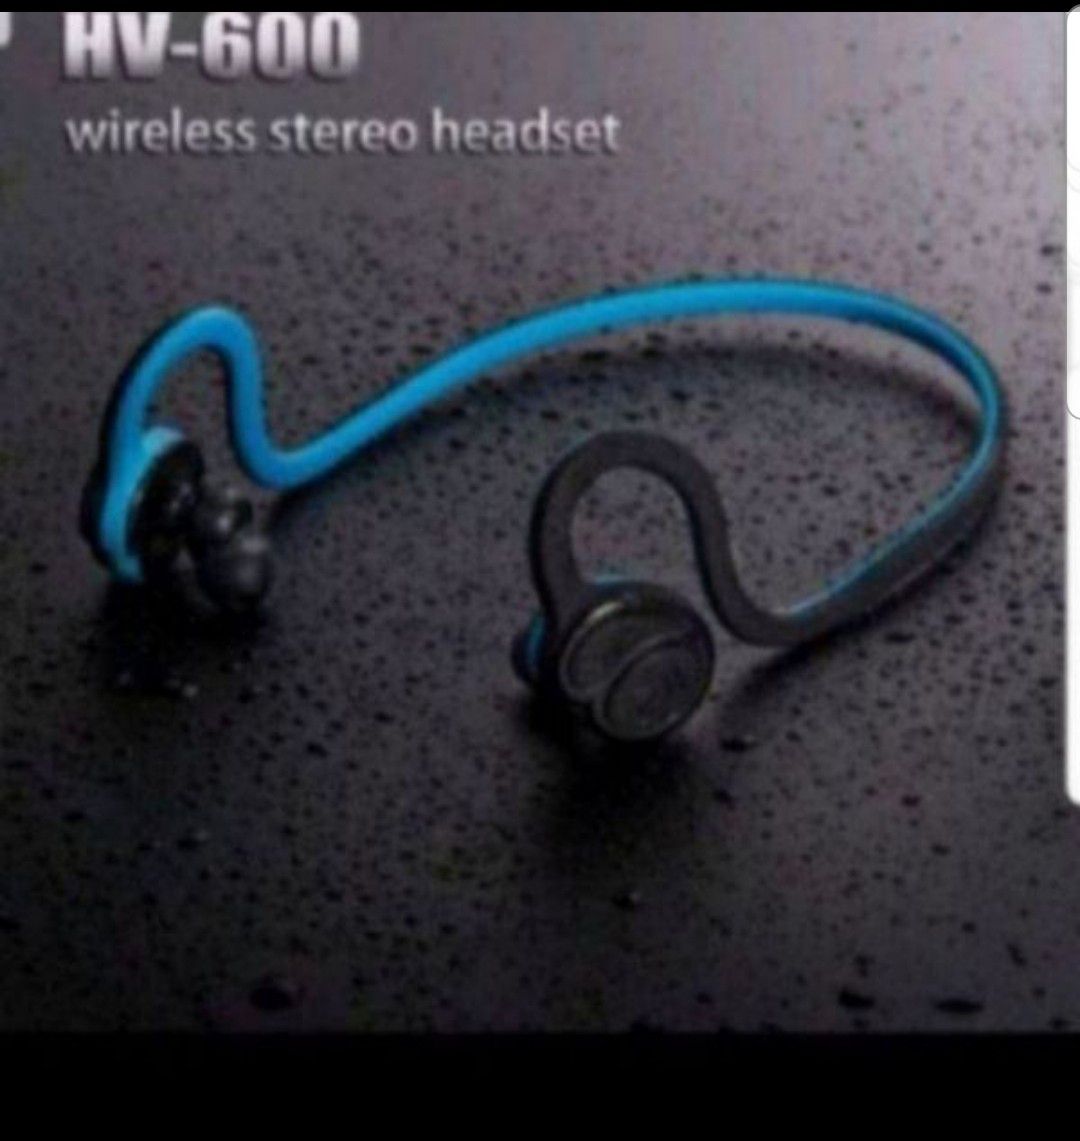 Bluetooth Wireless Sports Stereo Headset Headphone HV600 Handsfree Sweatproitof **2 for $25**